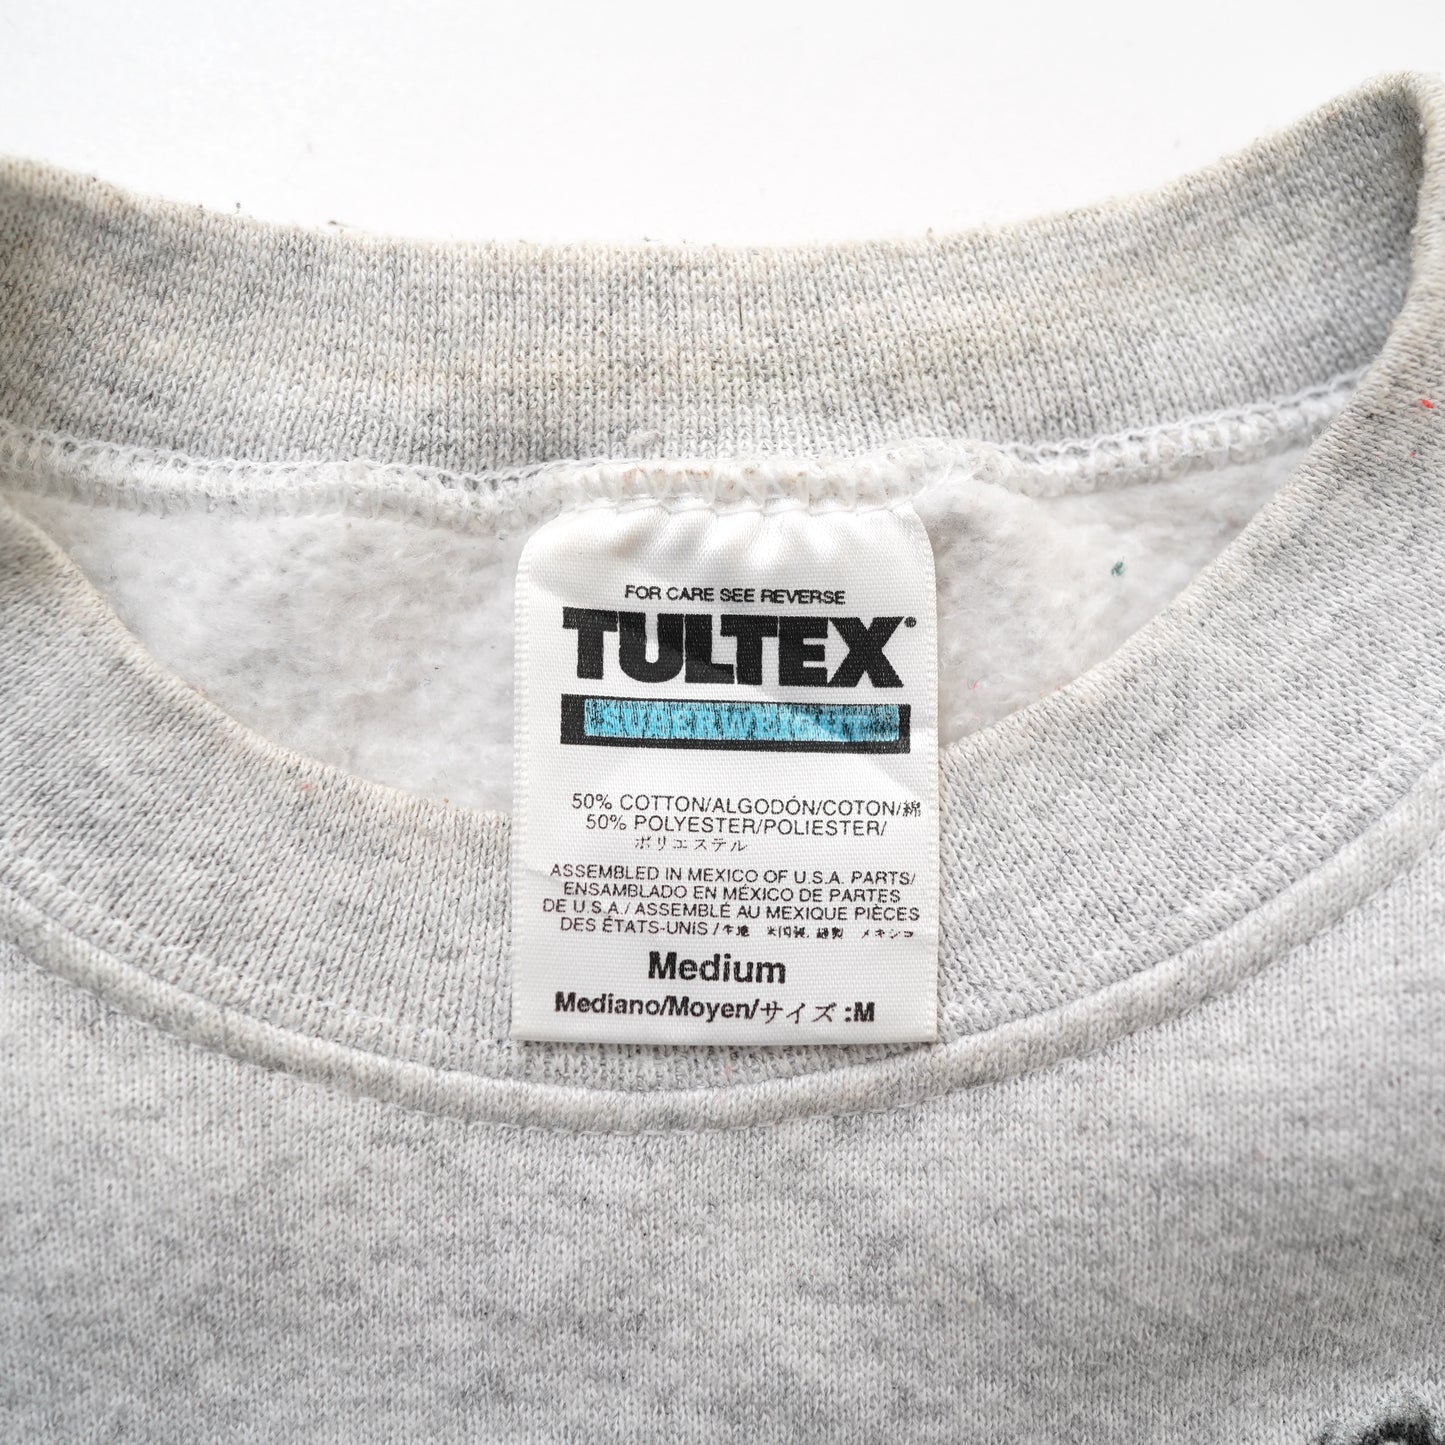 90s Tultex sweat